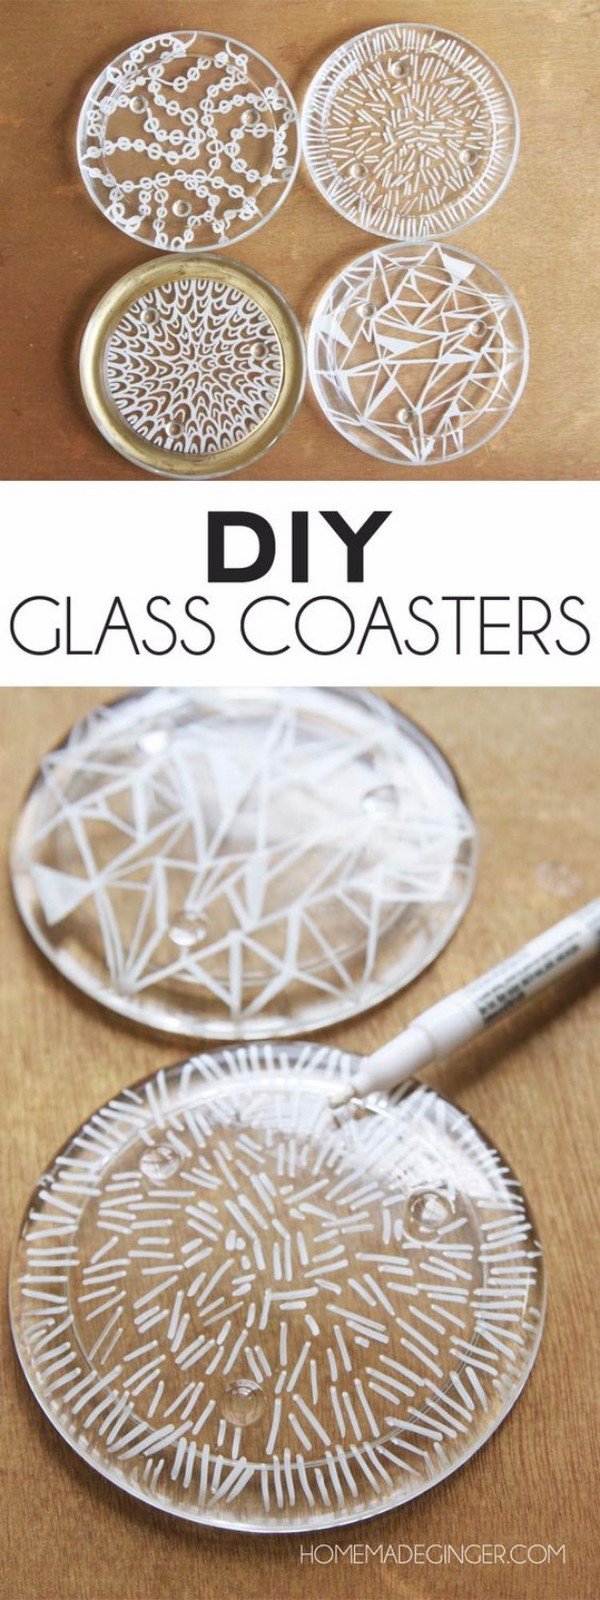 DIY Glass Coasters